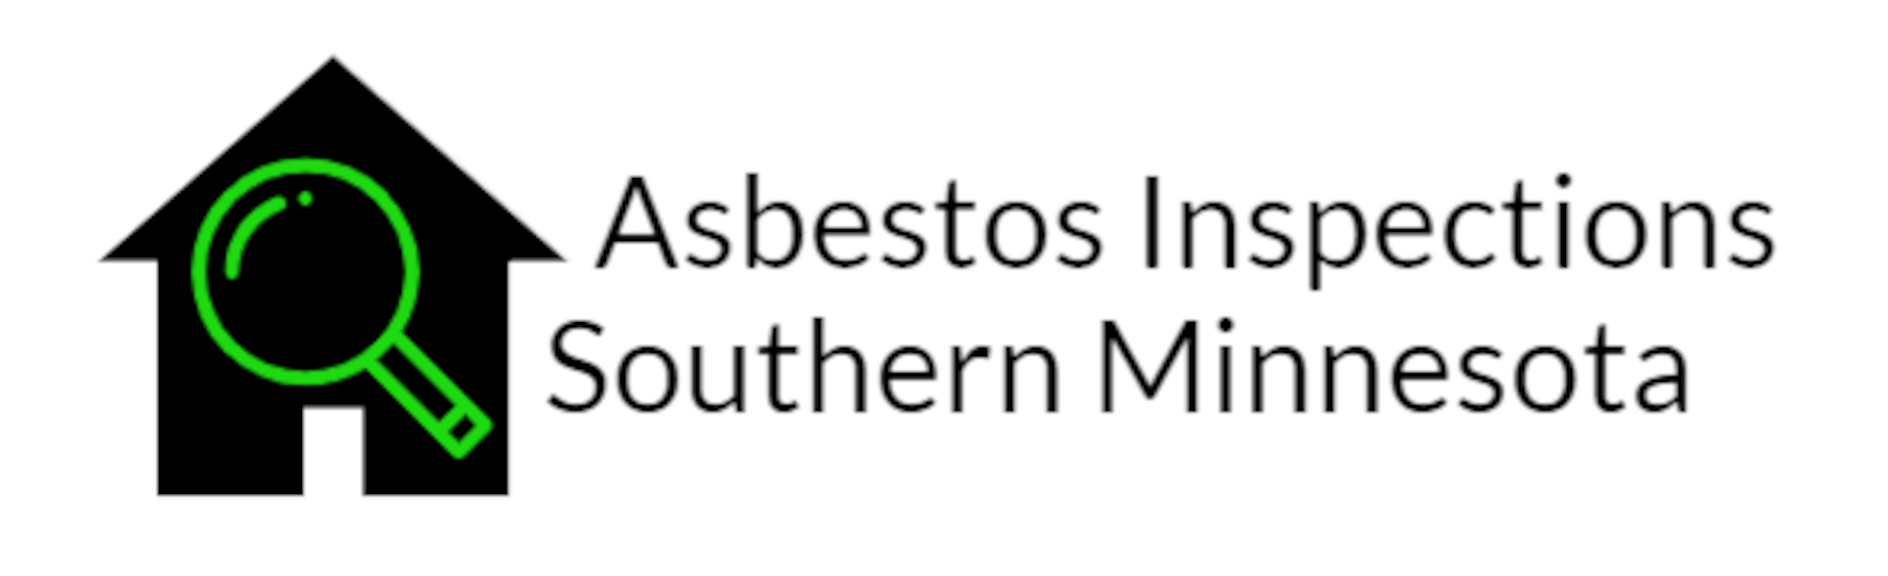 Asbestos Inspections of Southern Minnesota Logo